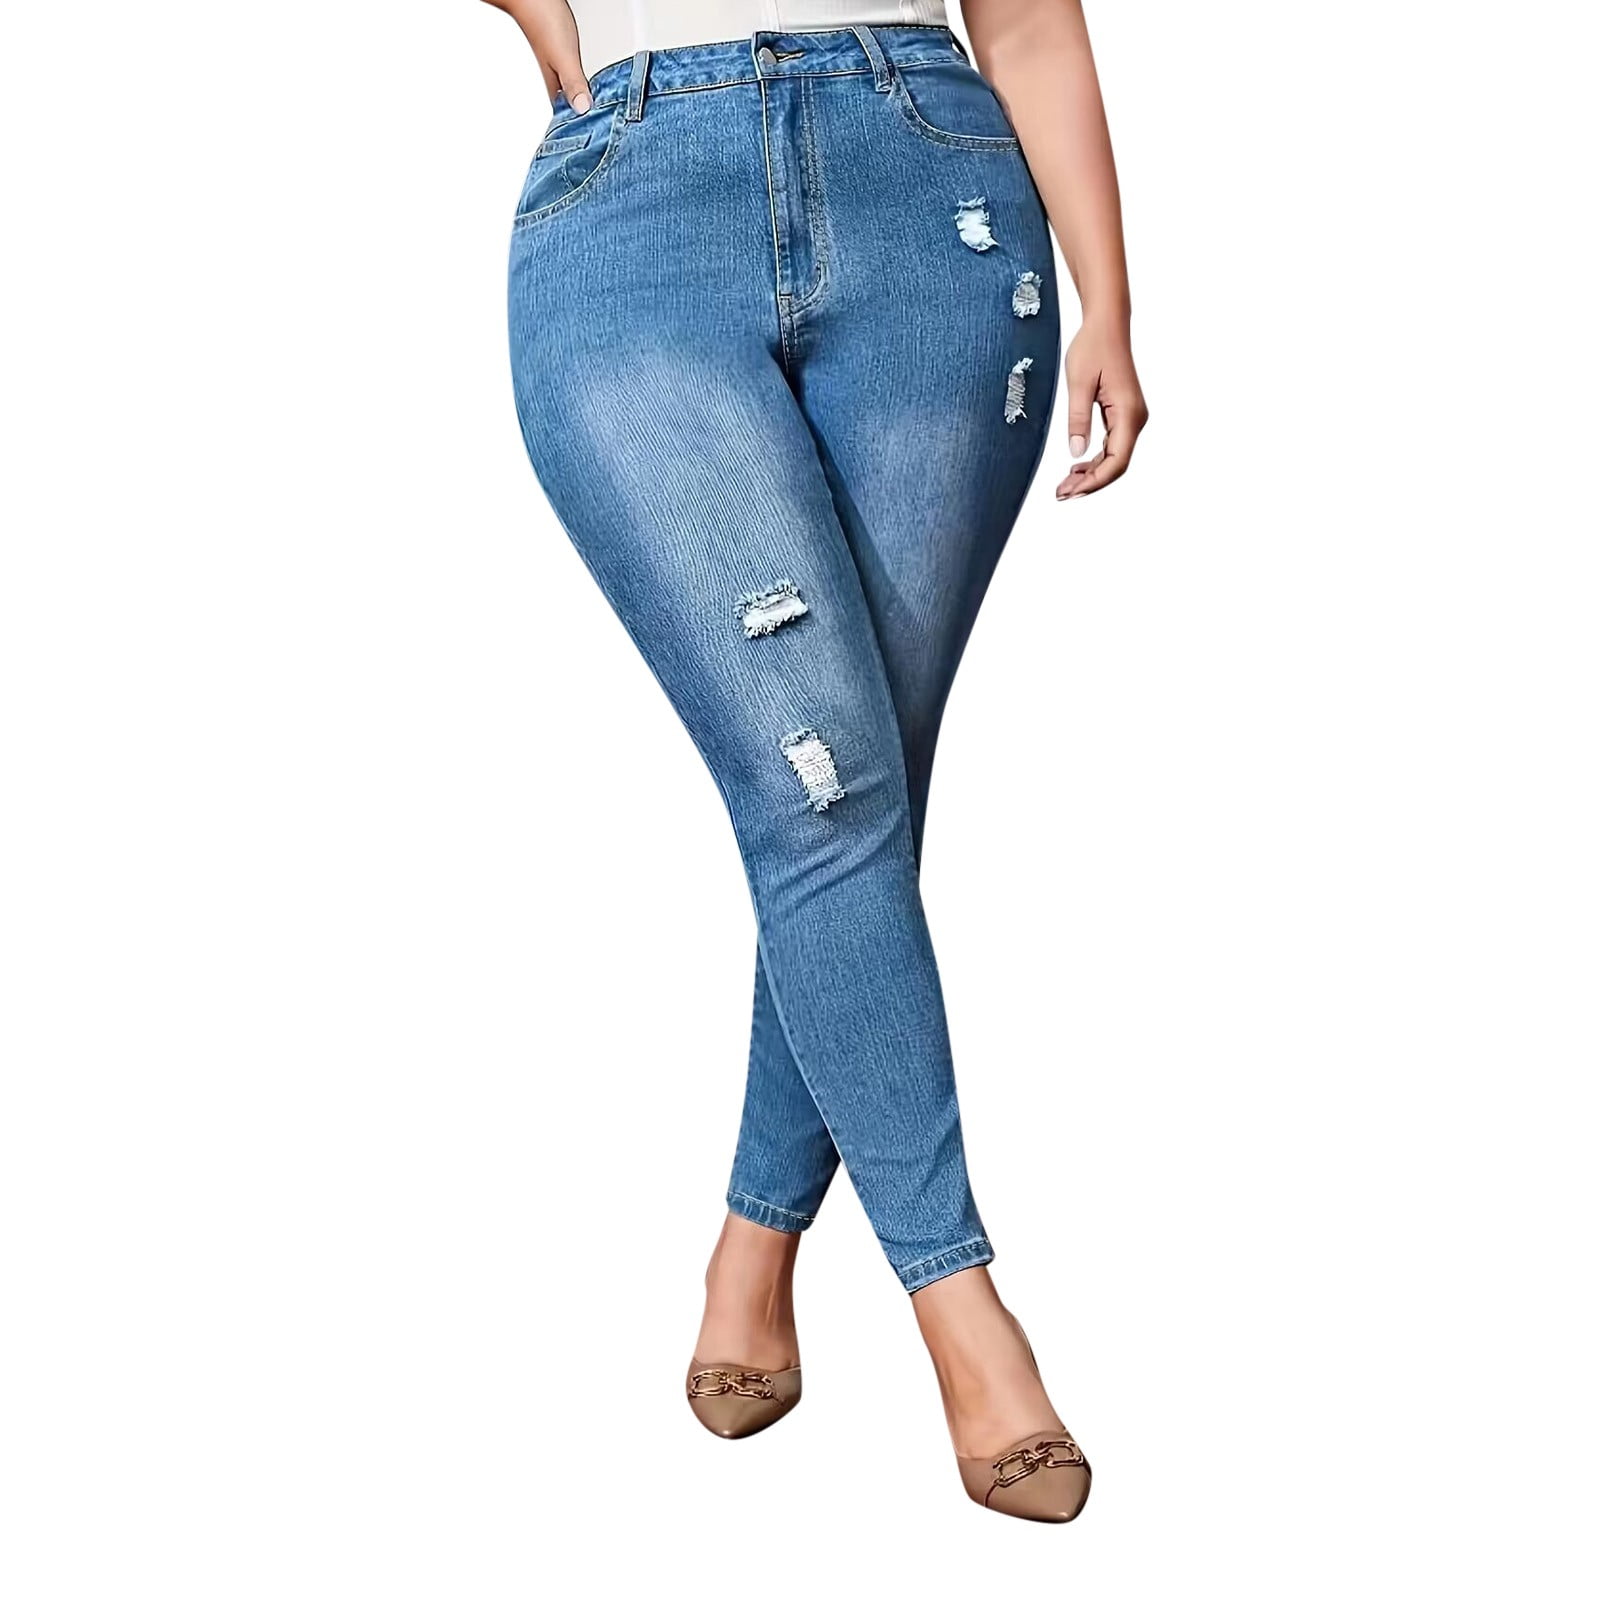 Ierhent Wonens Jeans Women's Bell Bottom Jeans Destroyed Denim Pants ...